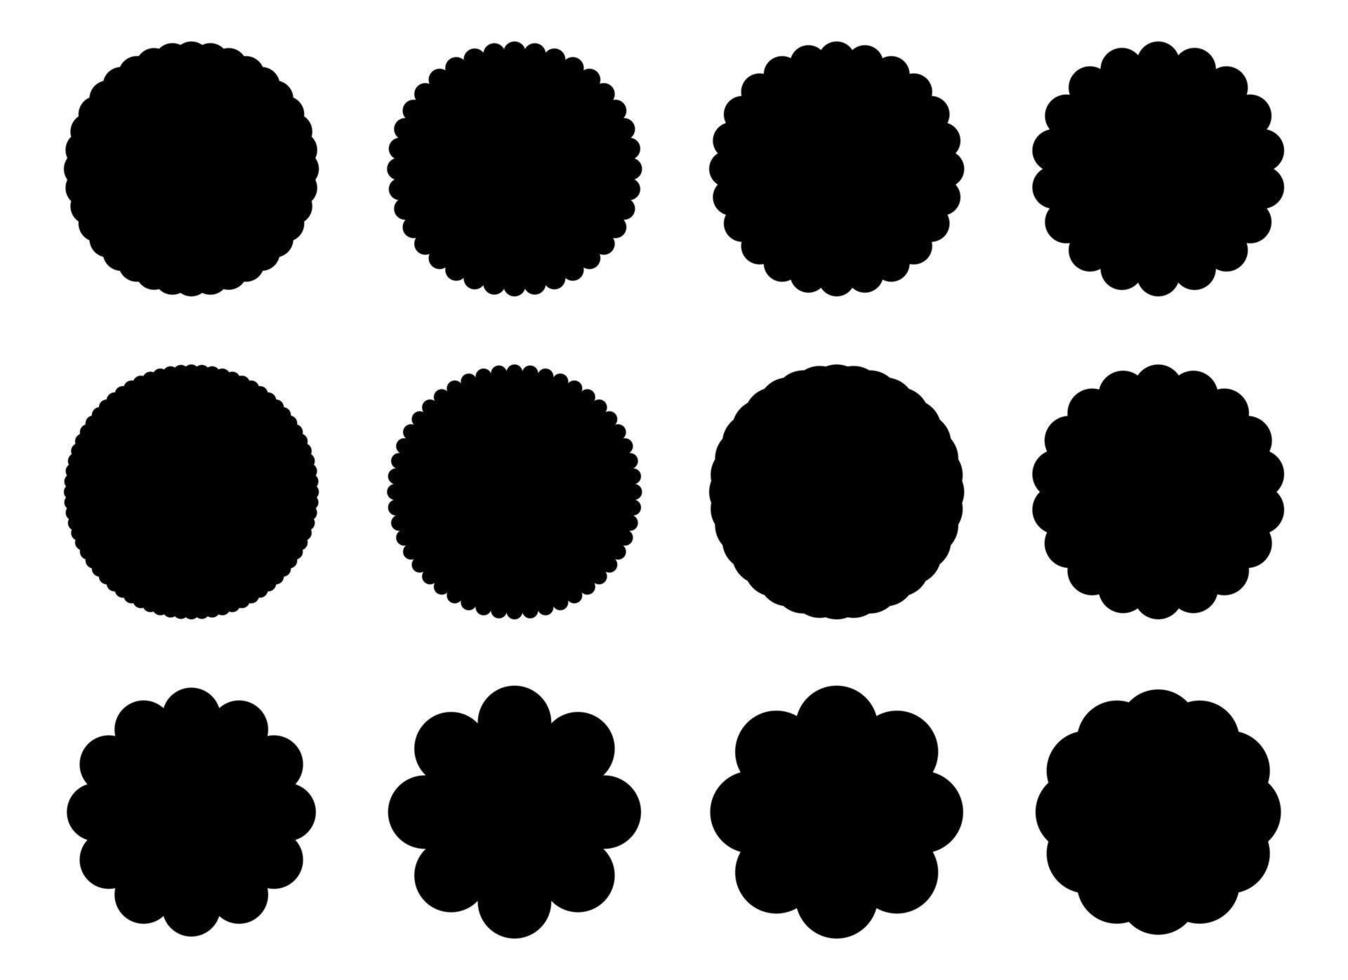 Black simple banner vector design illustration isolated on white background